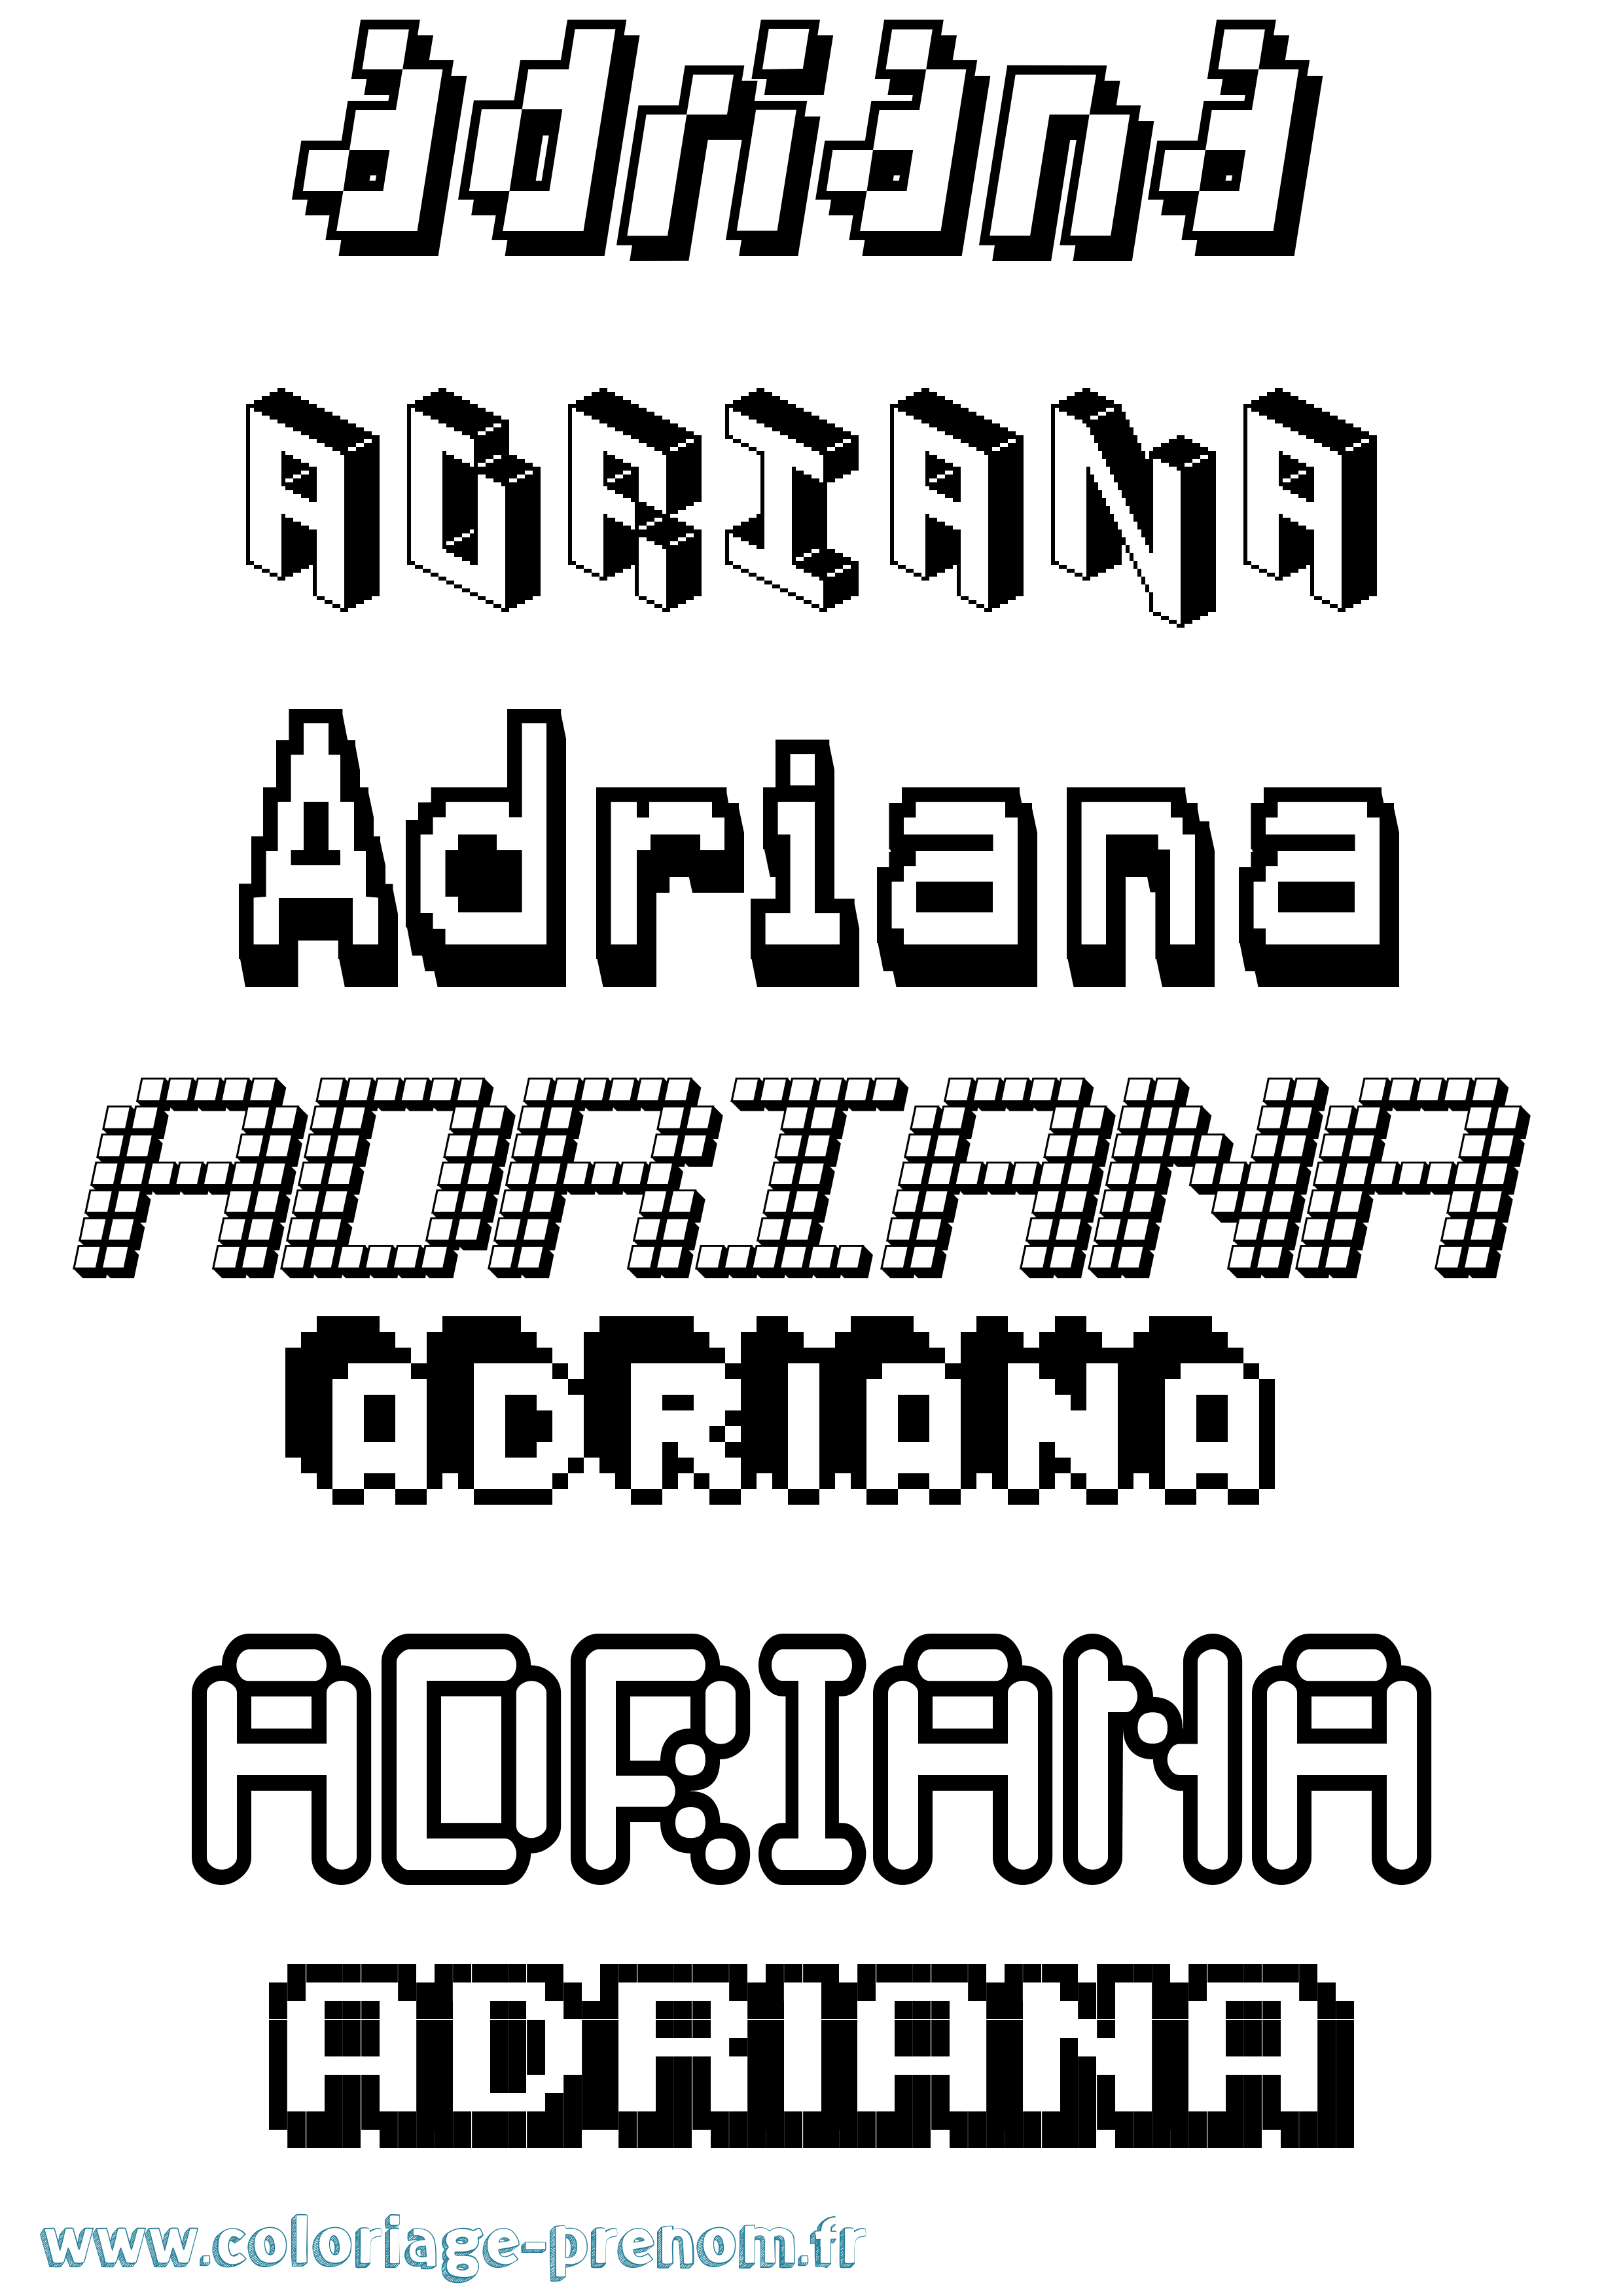 Coloriage prénom Adriana Pixel